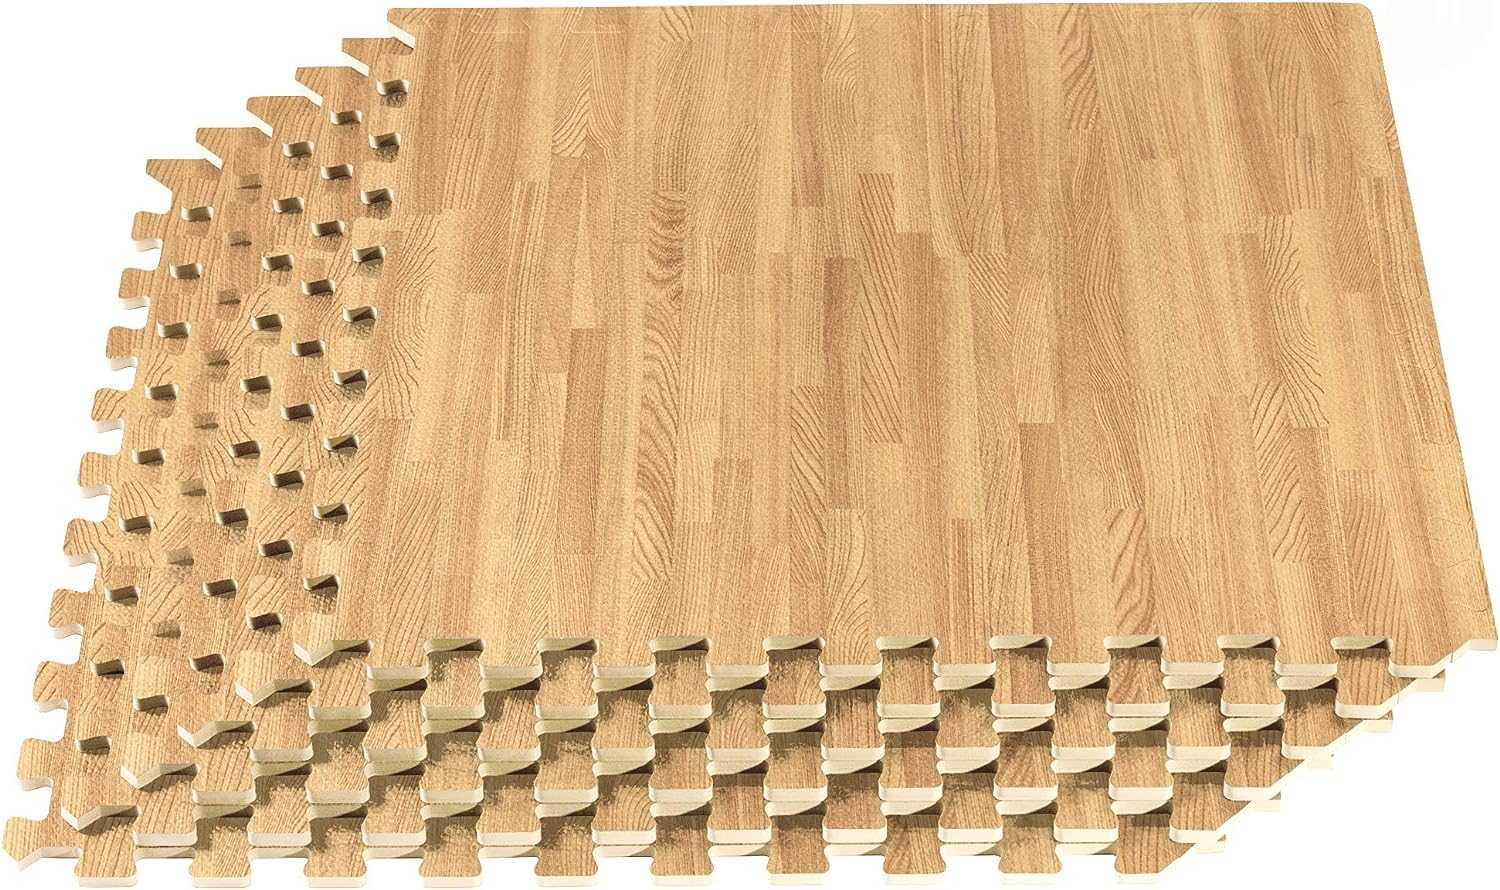 6-Piece Forest Floor 5/8" Thick Premium Wood Grain Interlocking Foam Tiles (White Oak, 24 Square Feet) $28.50 + Free Shipping w/ Prime or on $35+